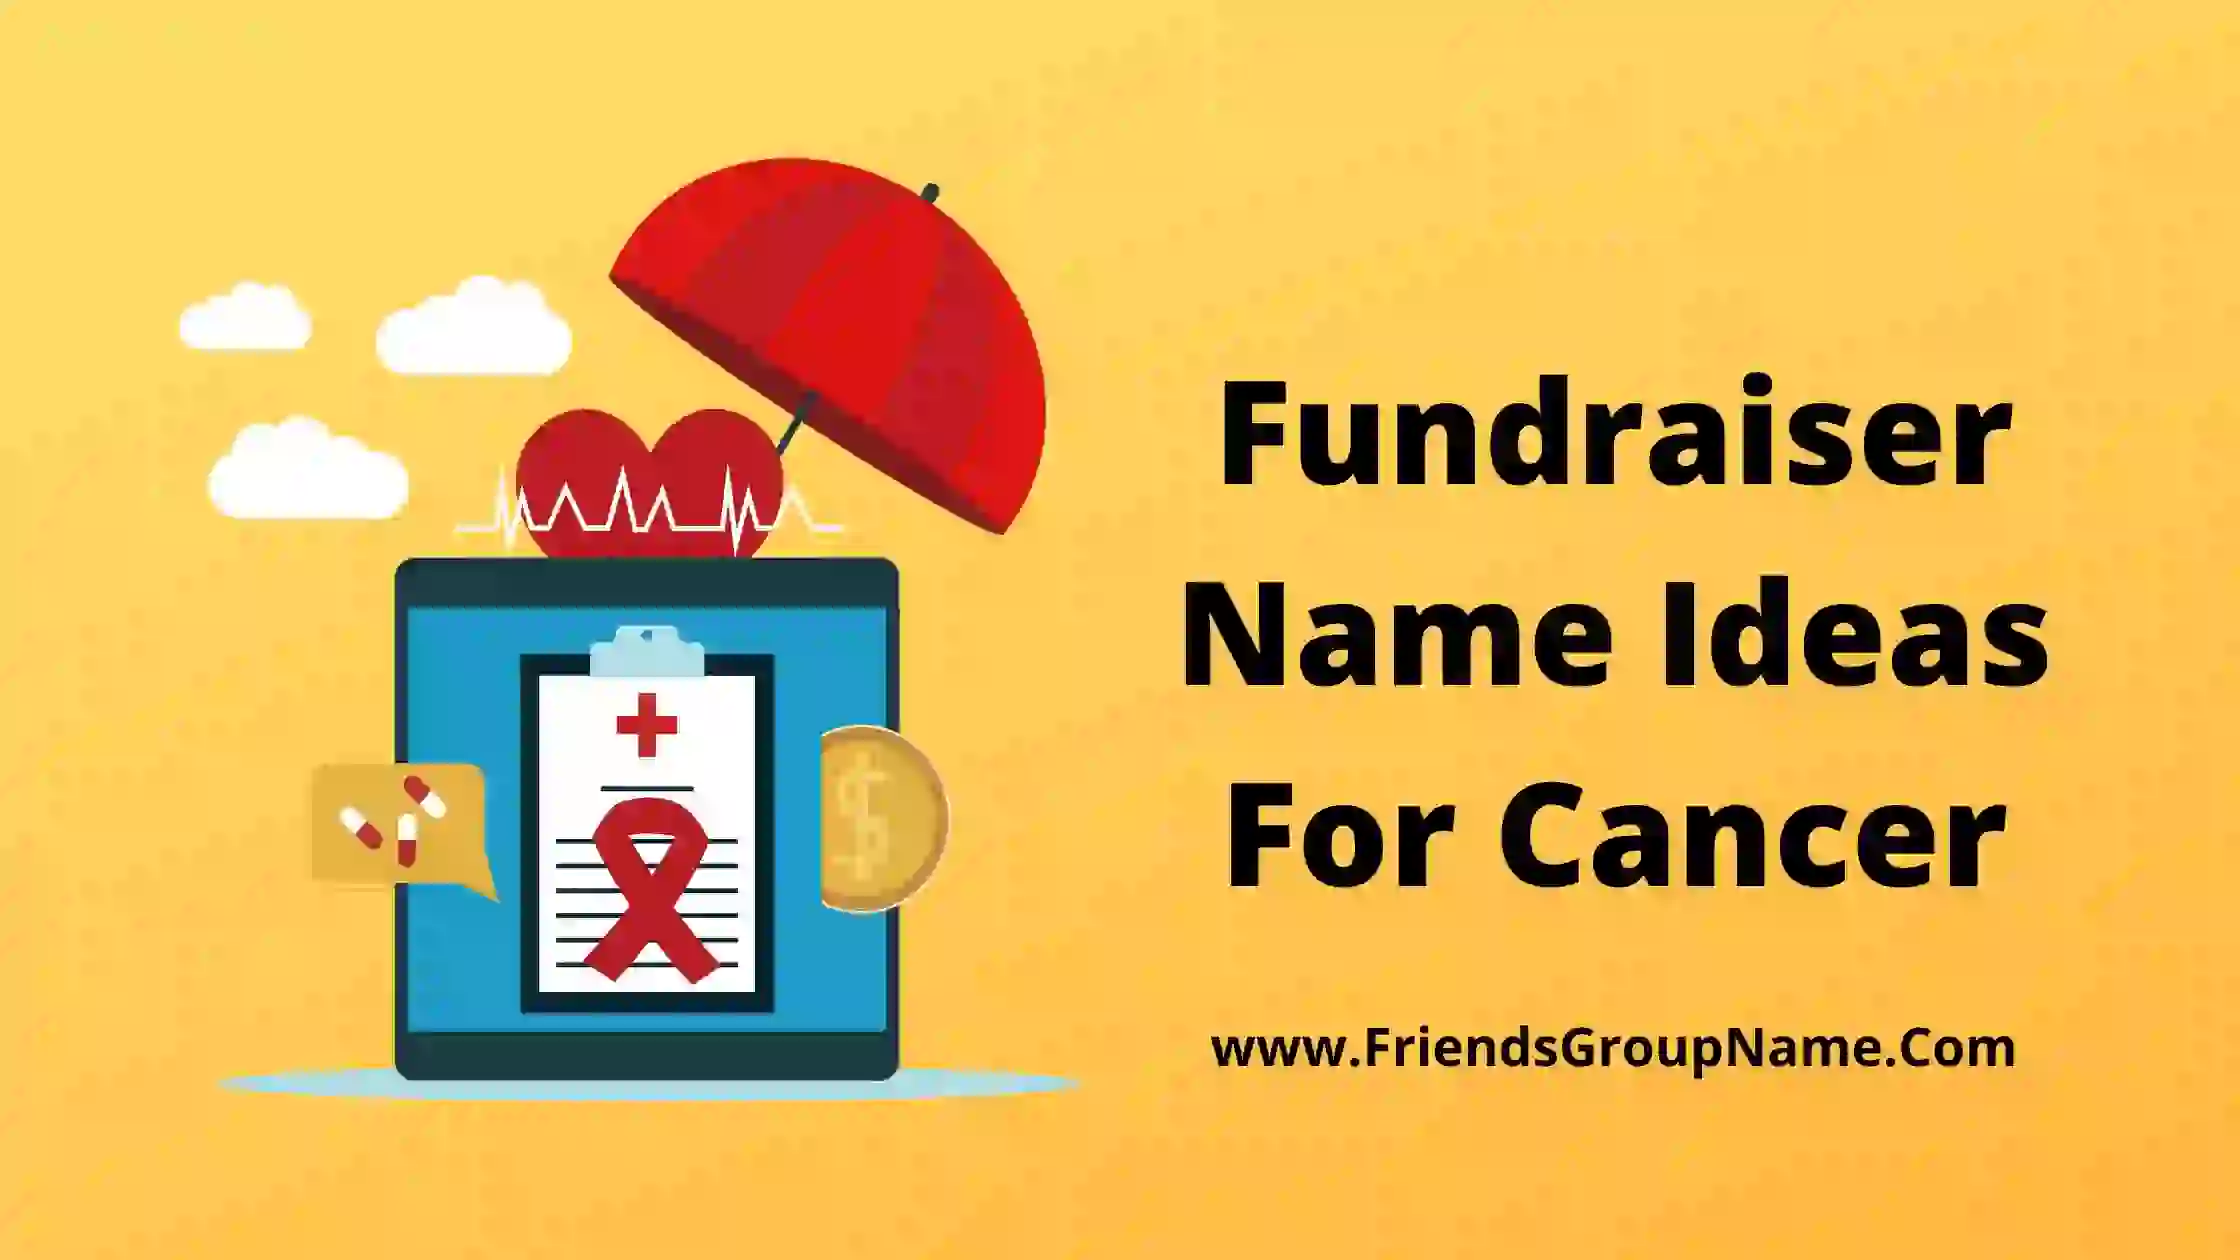 Fundraiser Name Ideas For Cancer